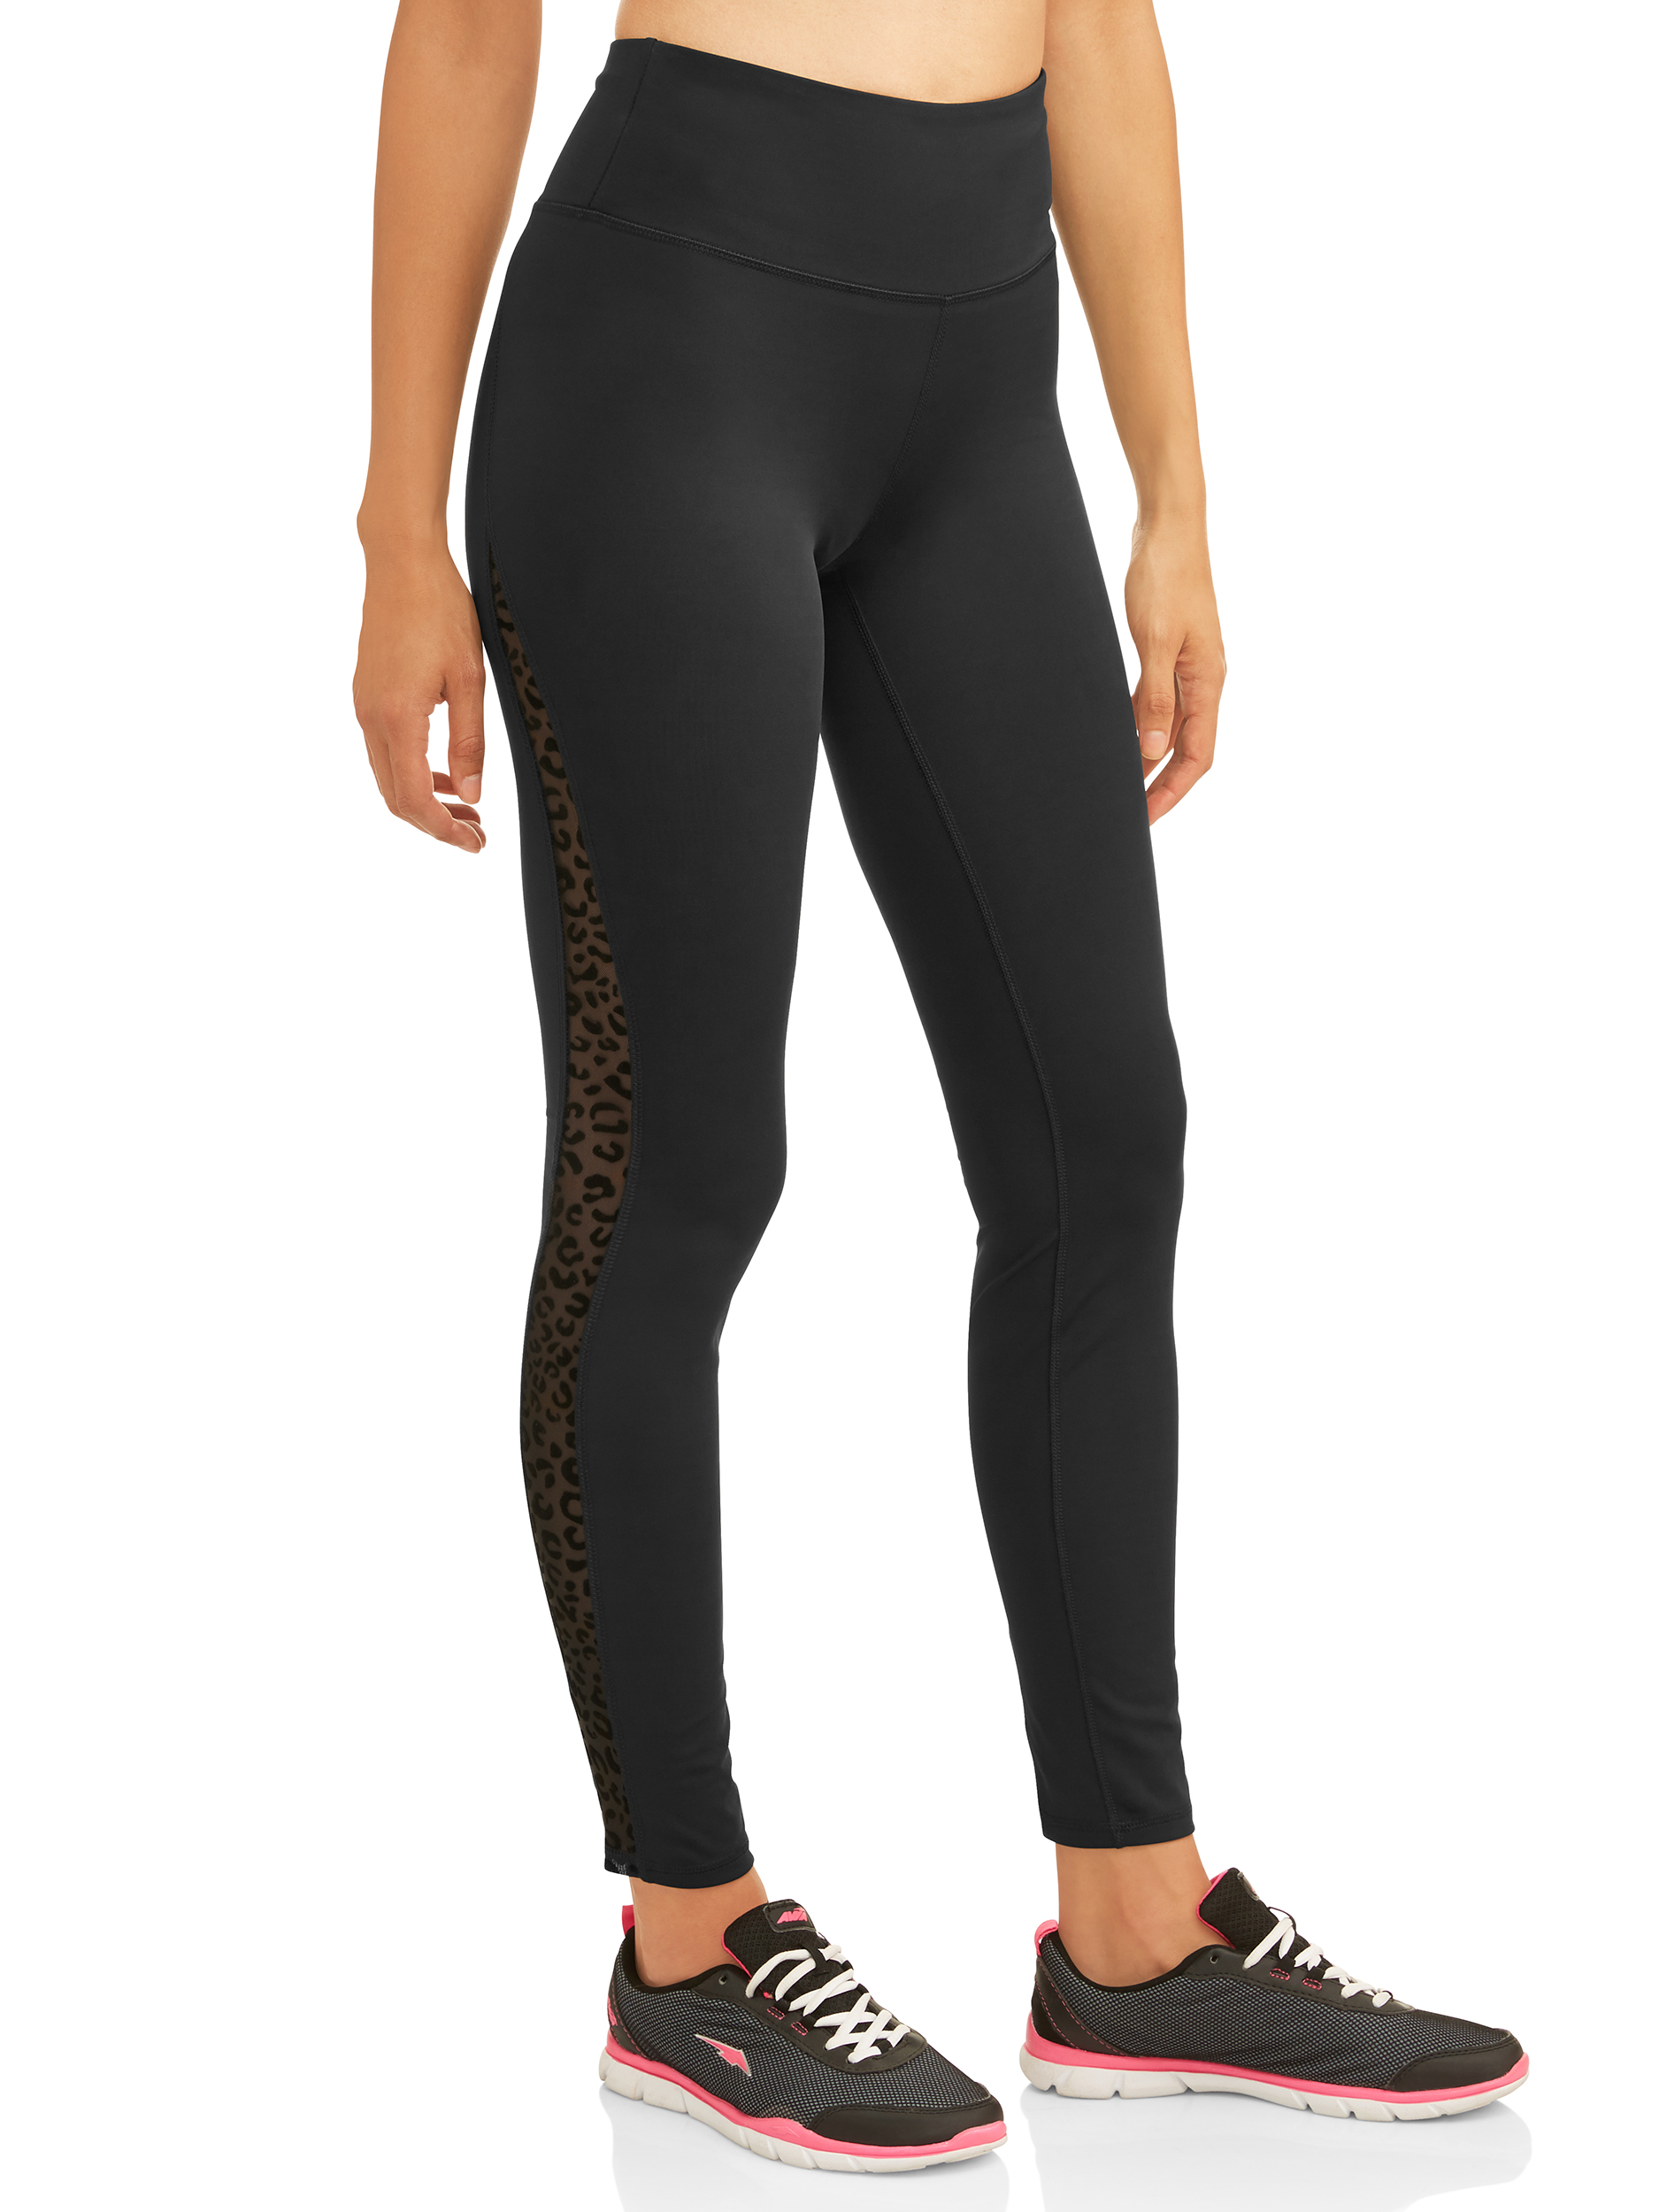 Women's Activewear Mesh Leopard Print Side Stripe Legging - image 1 of 3